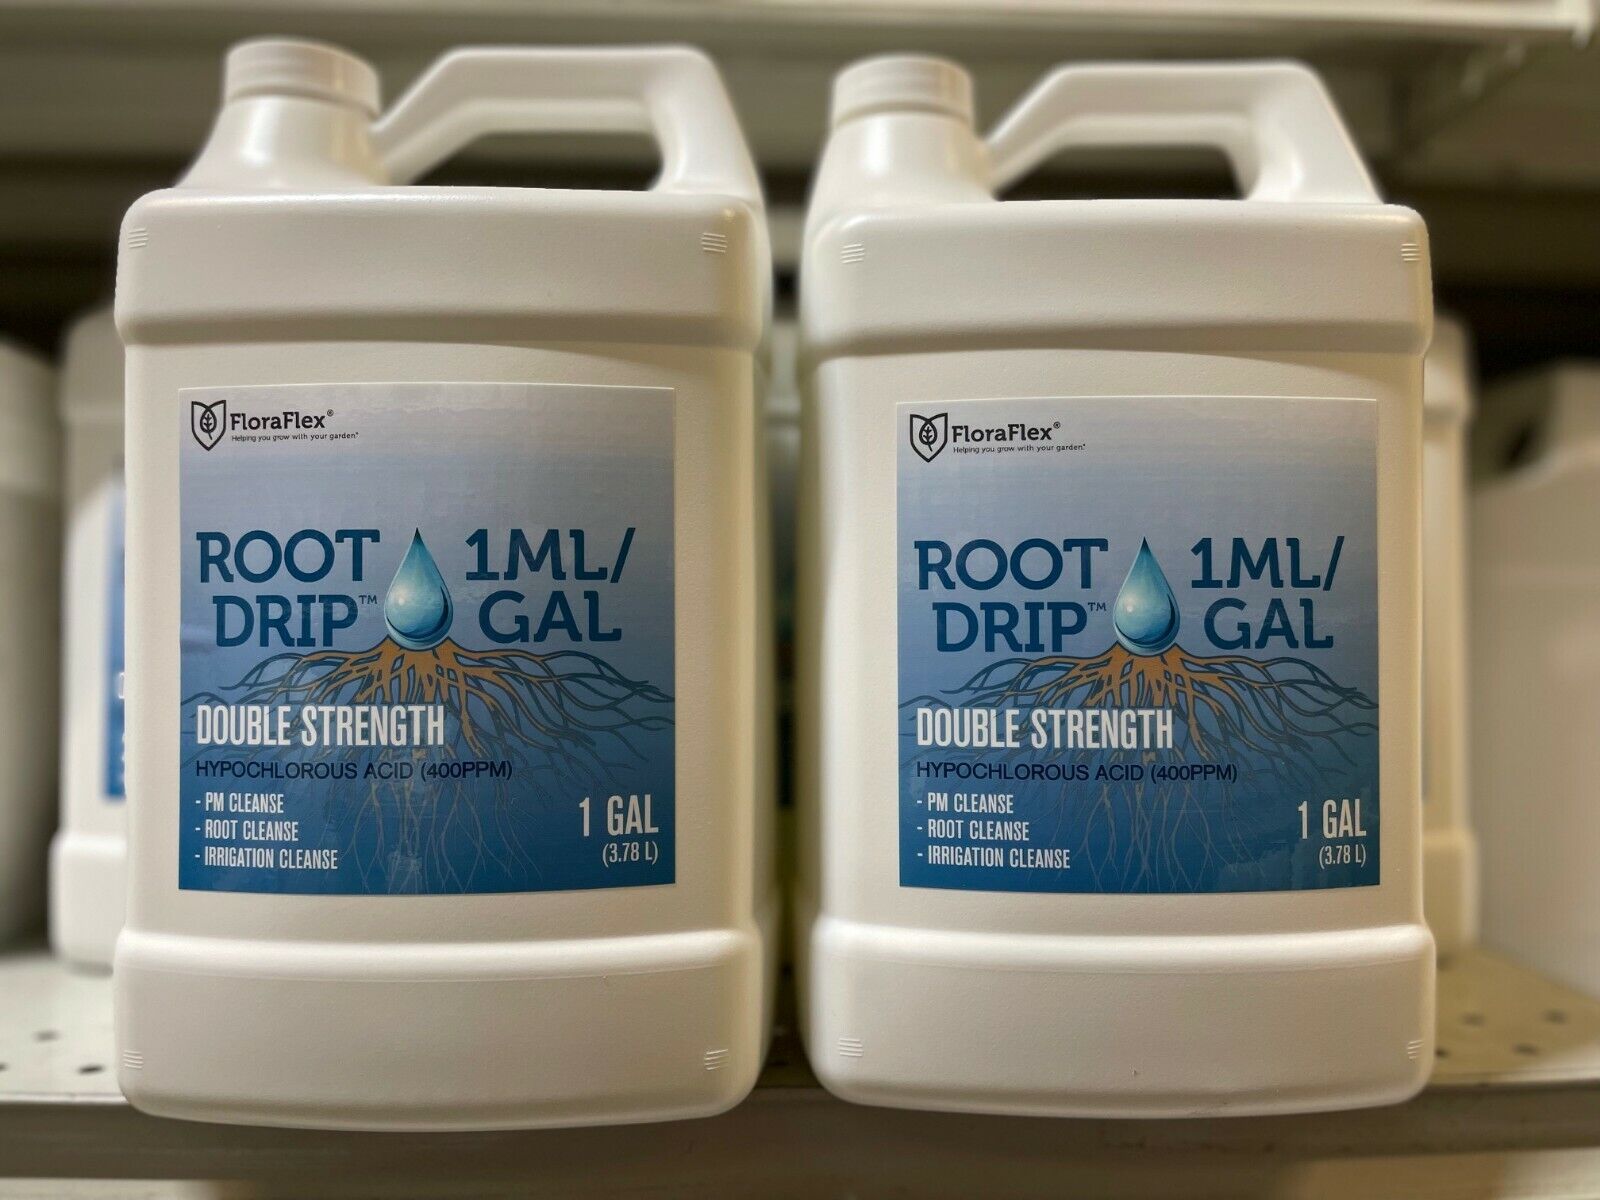 Flora Flex Root Drip Gallon Floraflex Nutrients Drip Clean Hypochlorous Acid